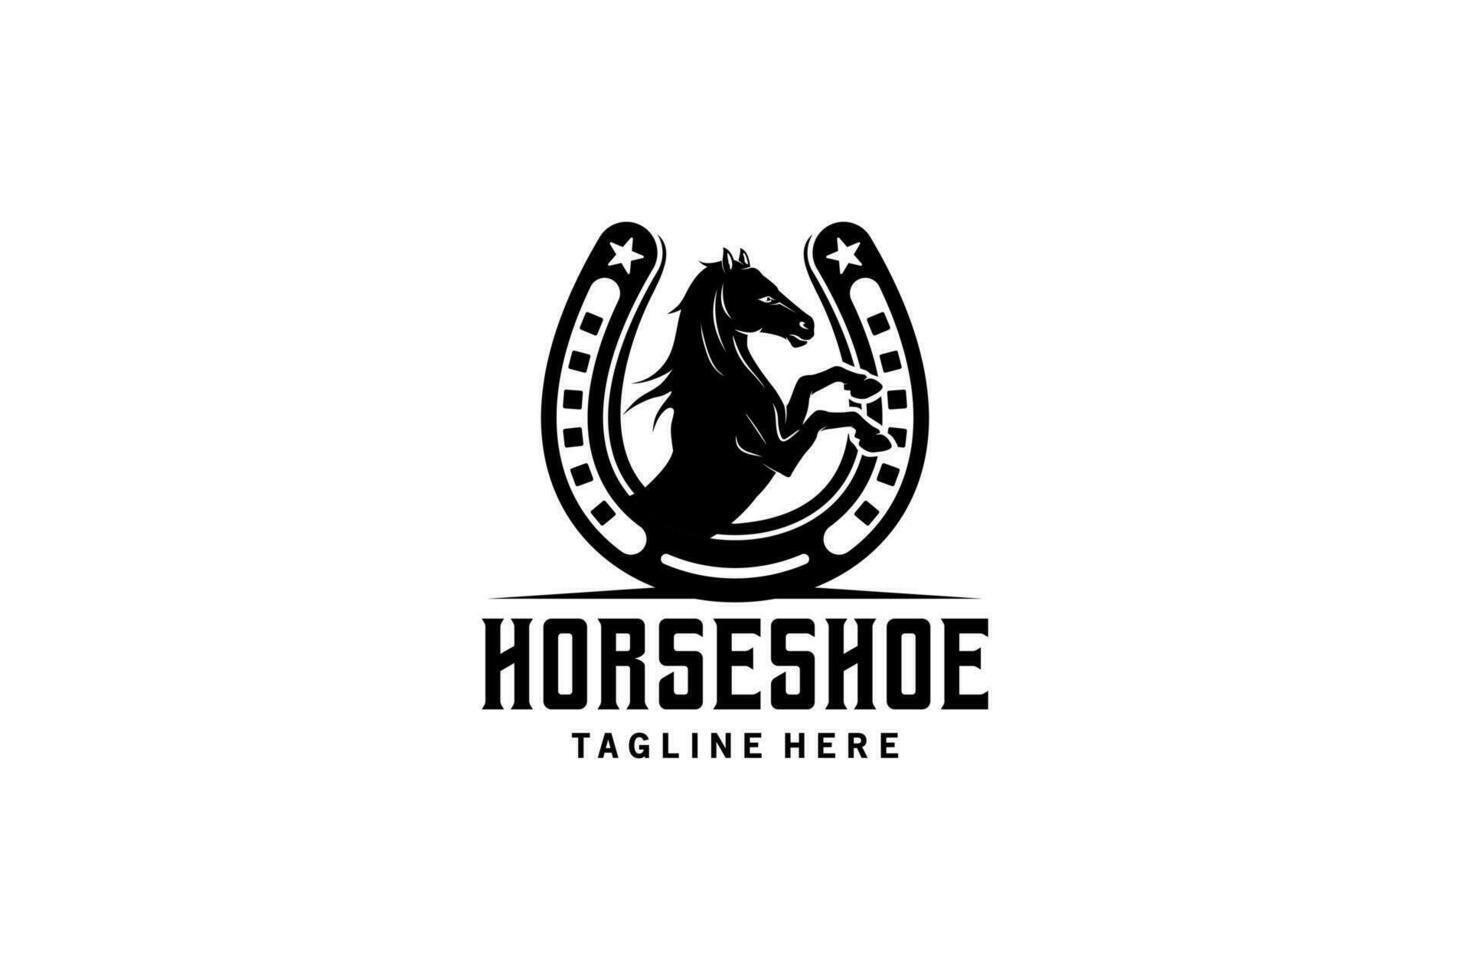 Vintage horseshoe logo design with creative concept vector